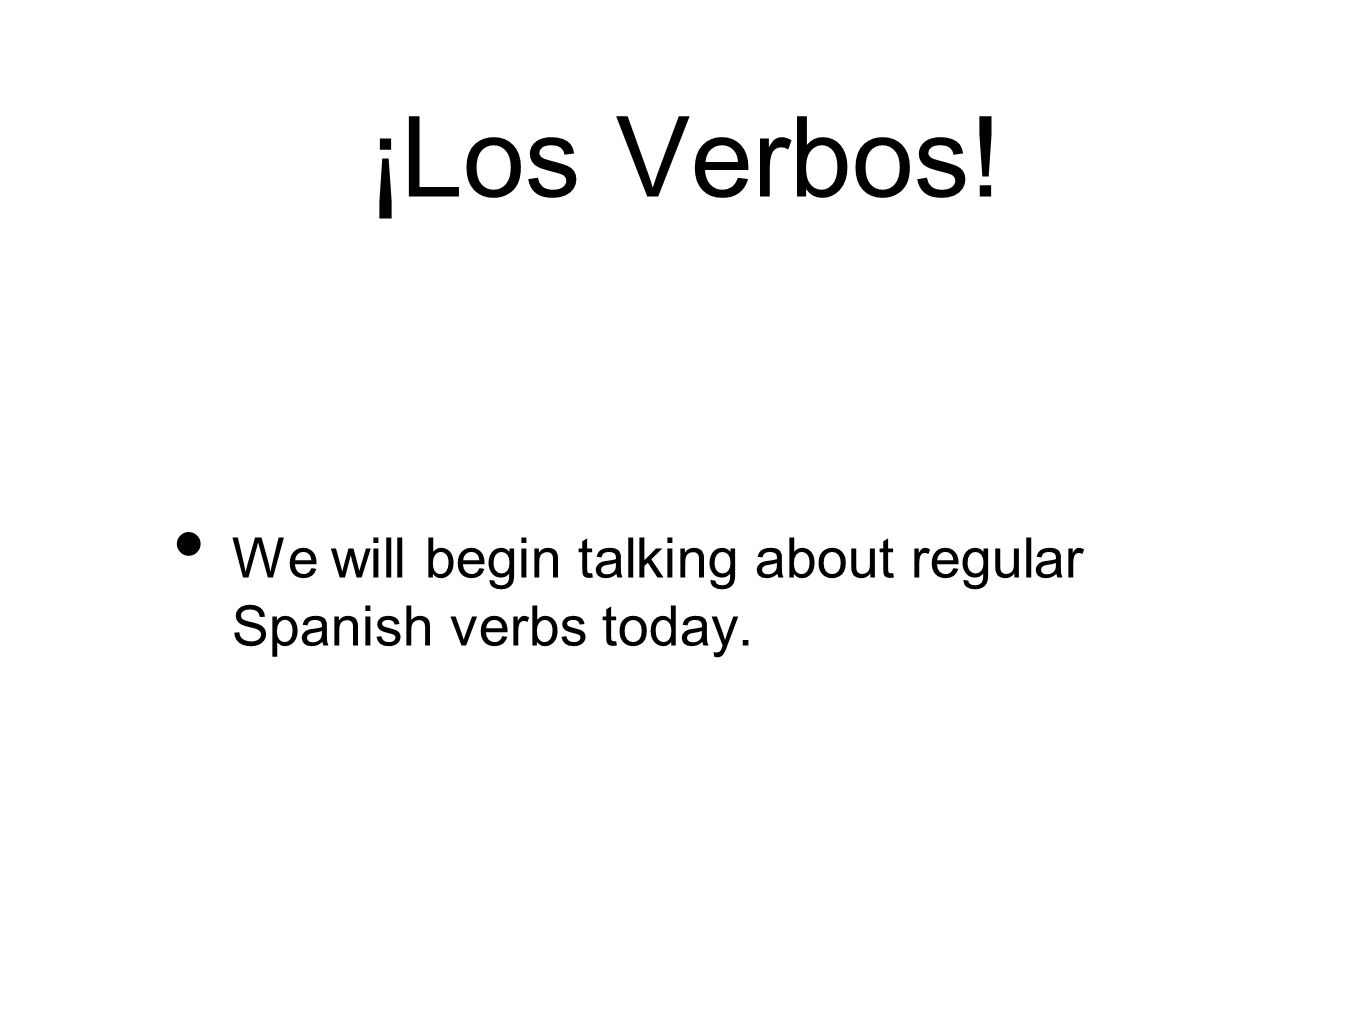 ¡Los Verbos! We will begin talking about regular Spanish verbs today.